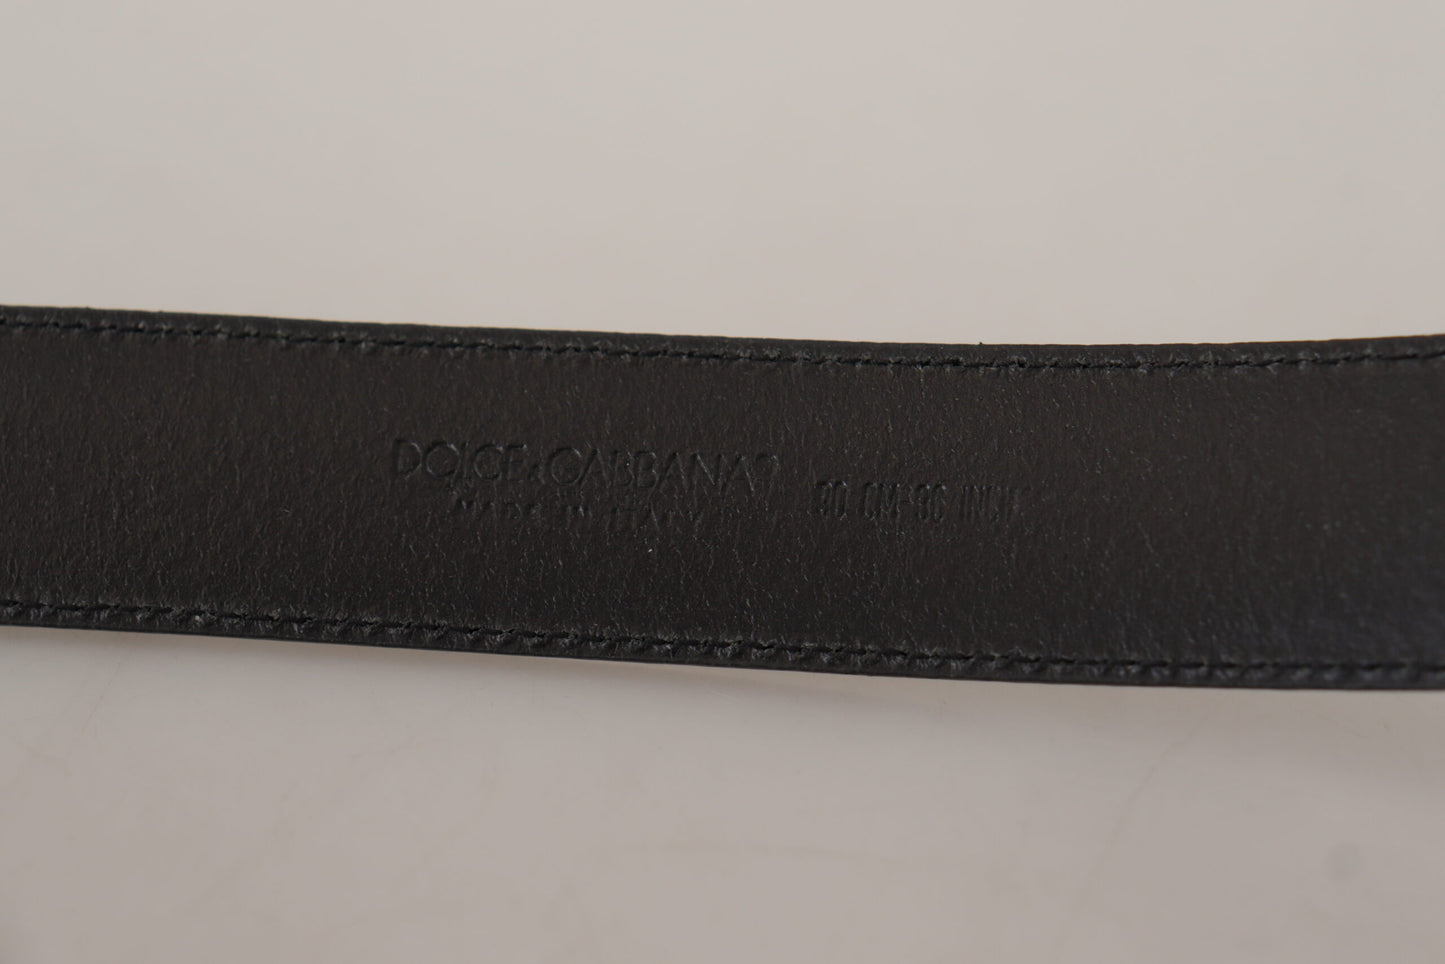 Dolce & Gabbana Elegant Black Leather Belt with Metal Buckle | Fashionsarah.com